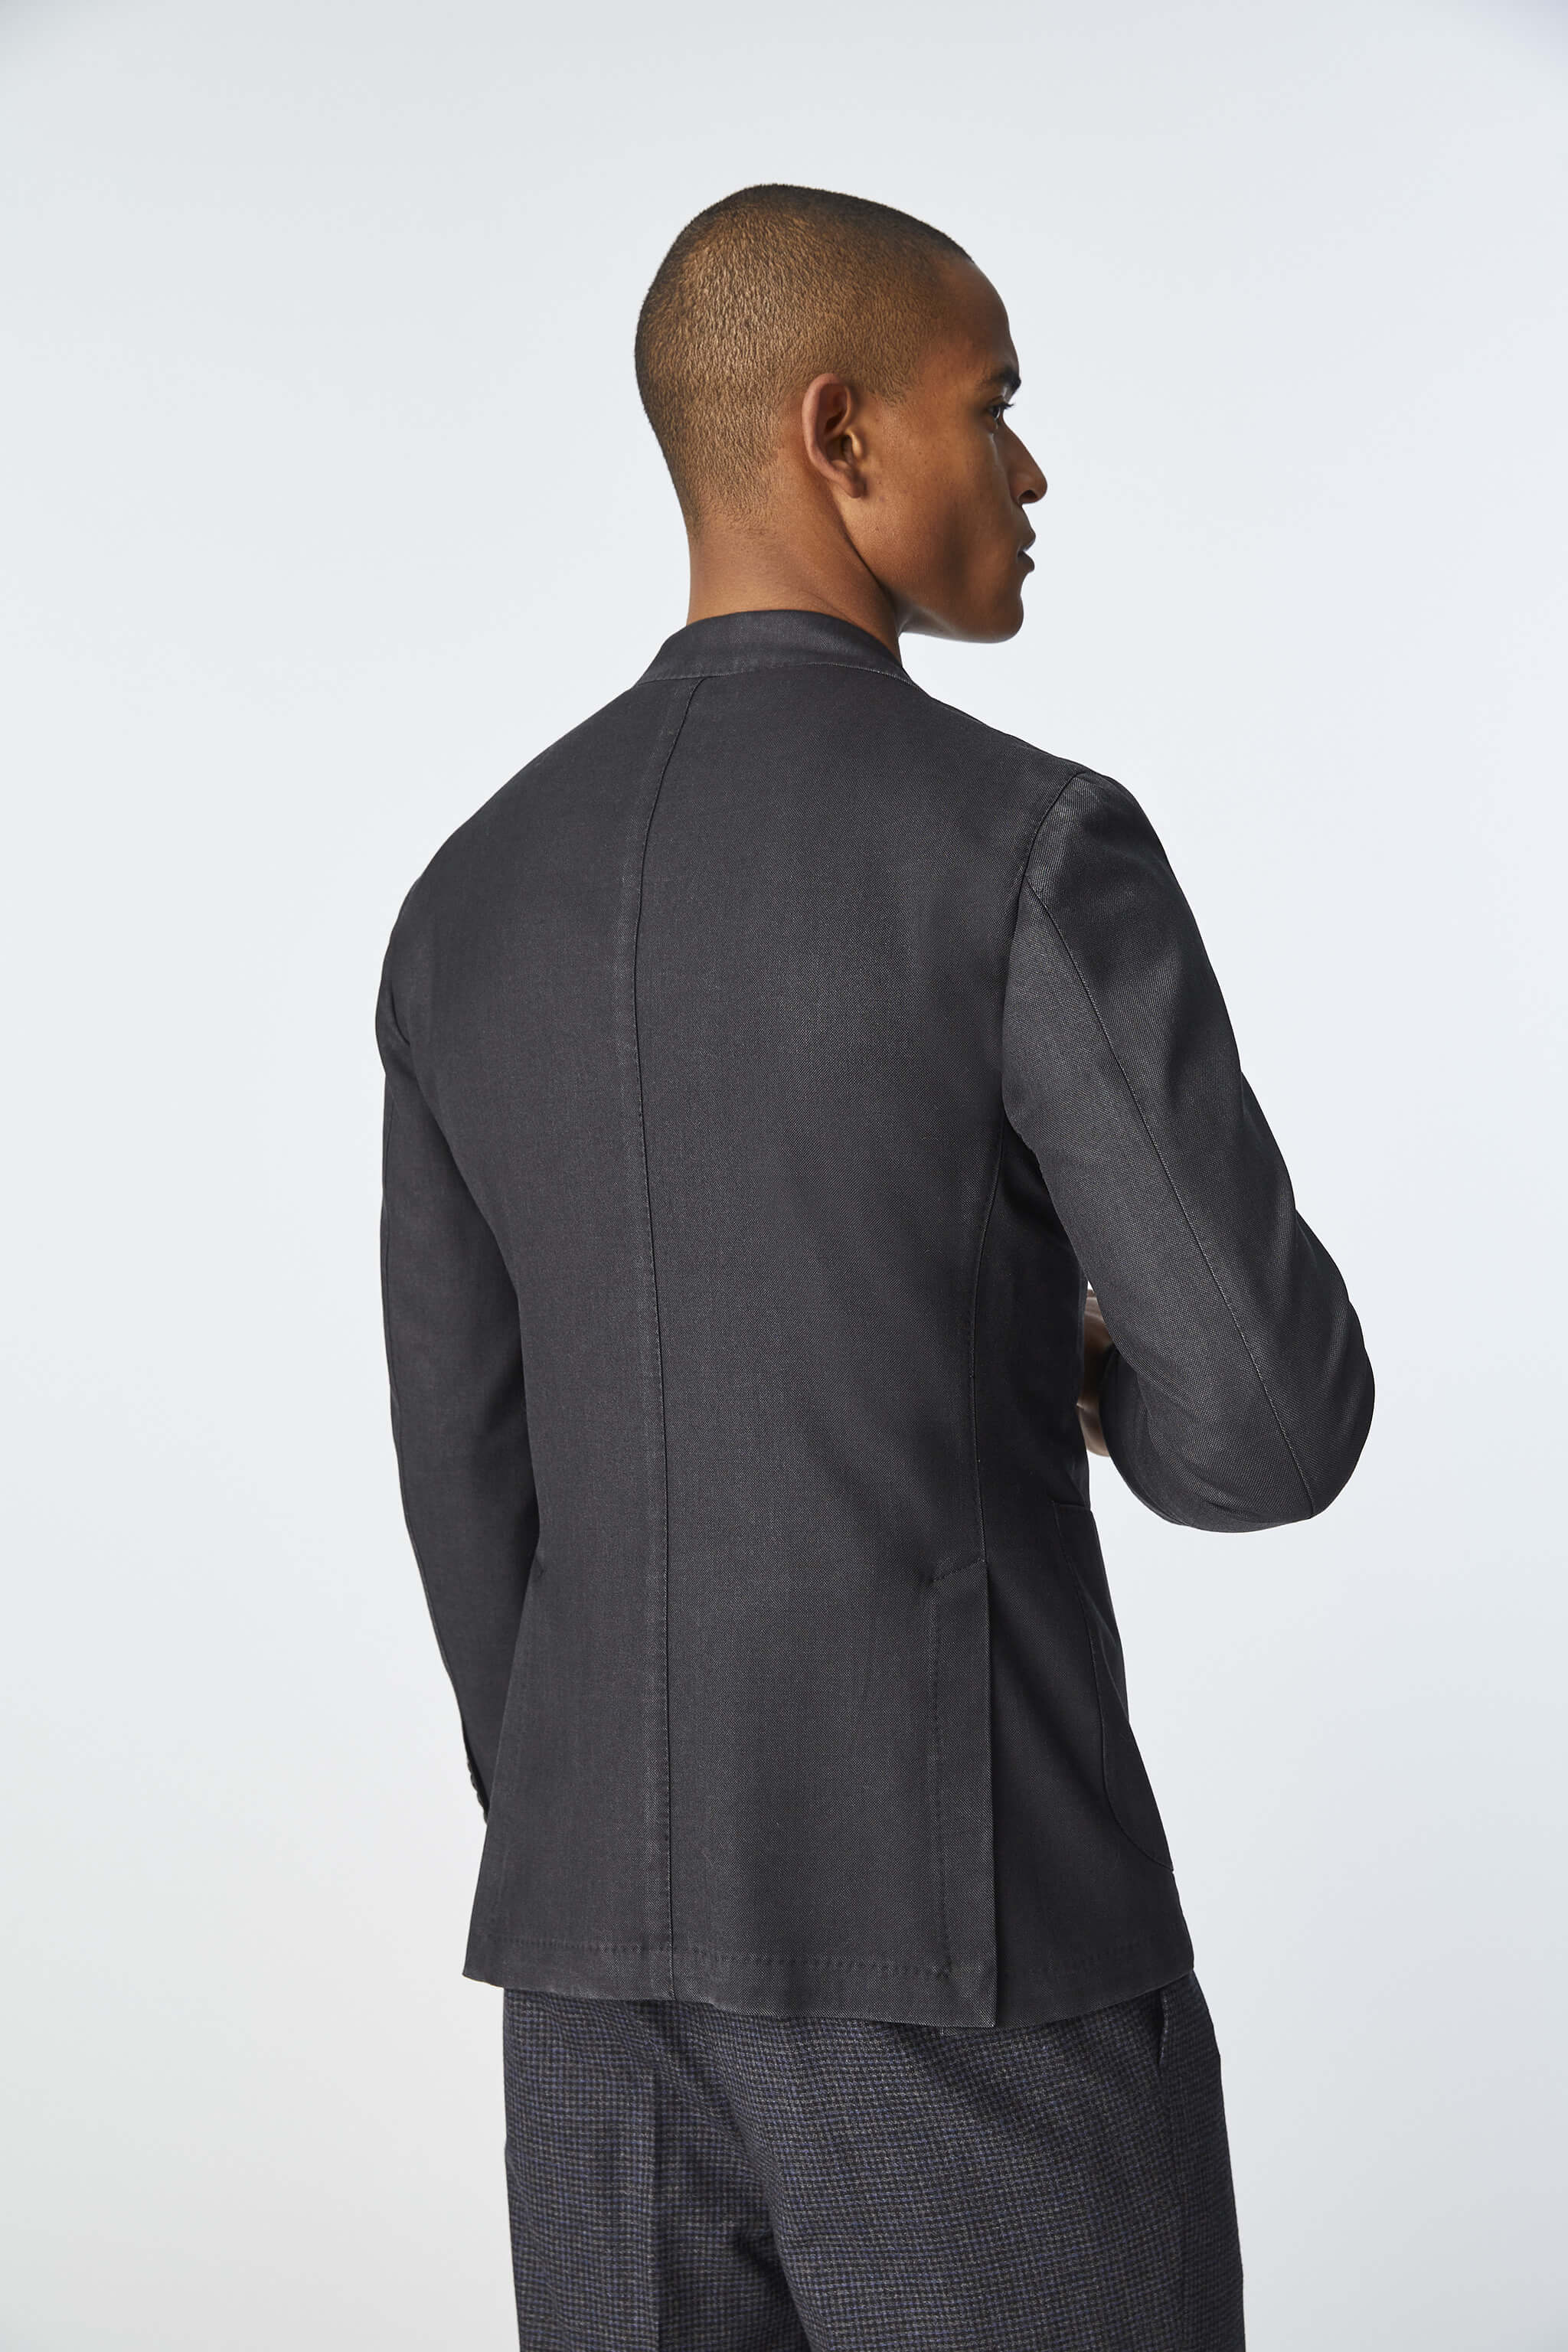 Garment-dyed JACK jacket in dark gray